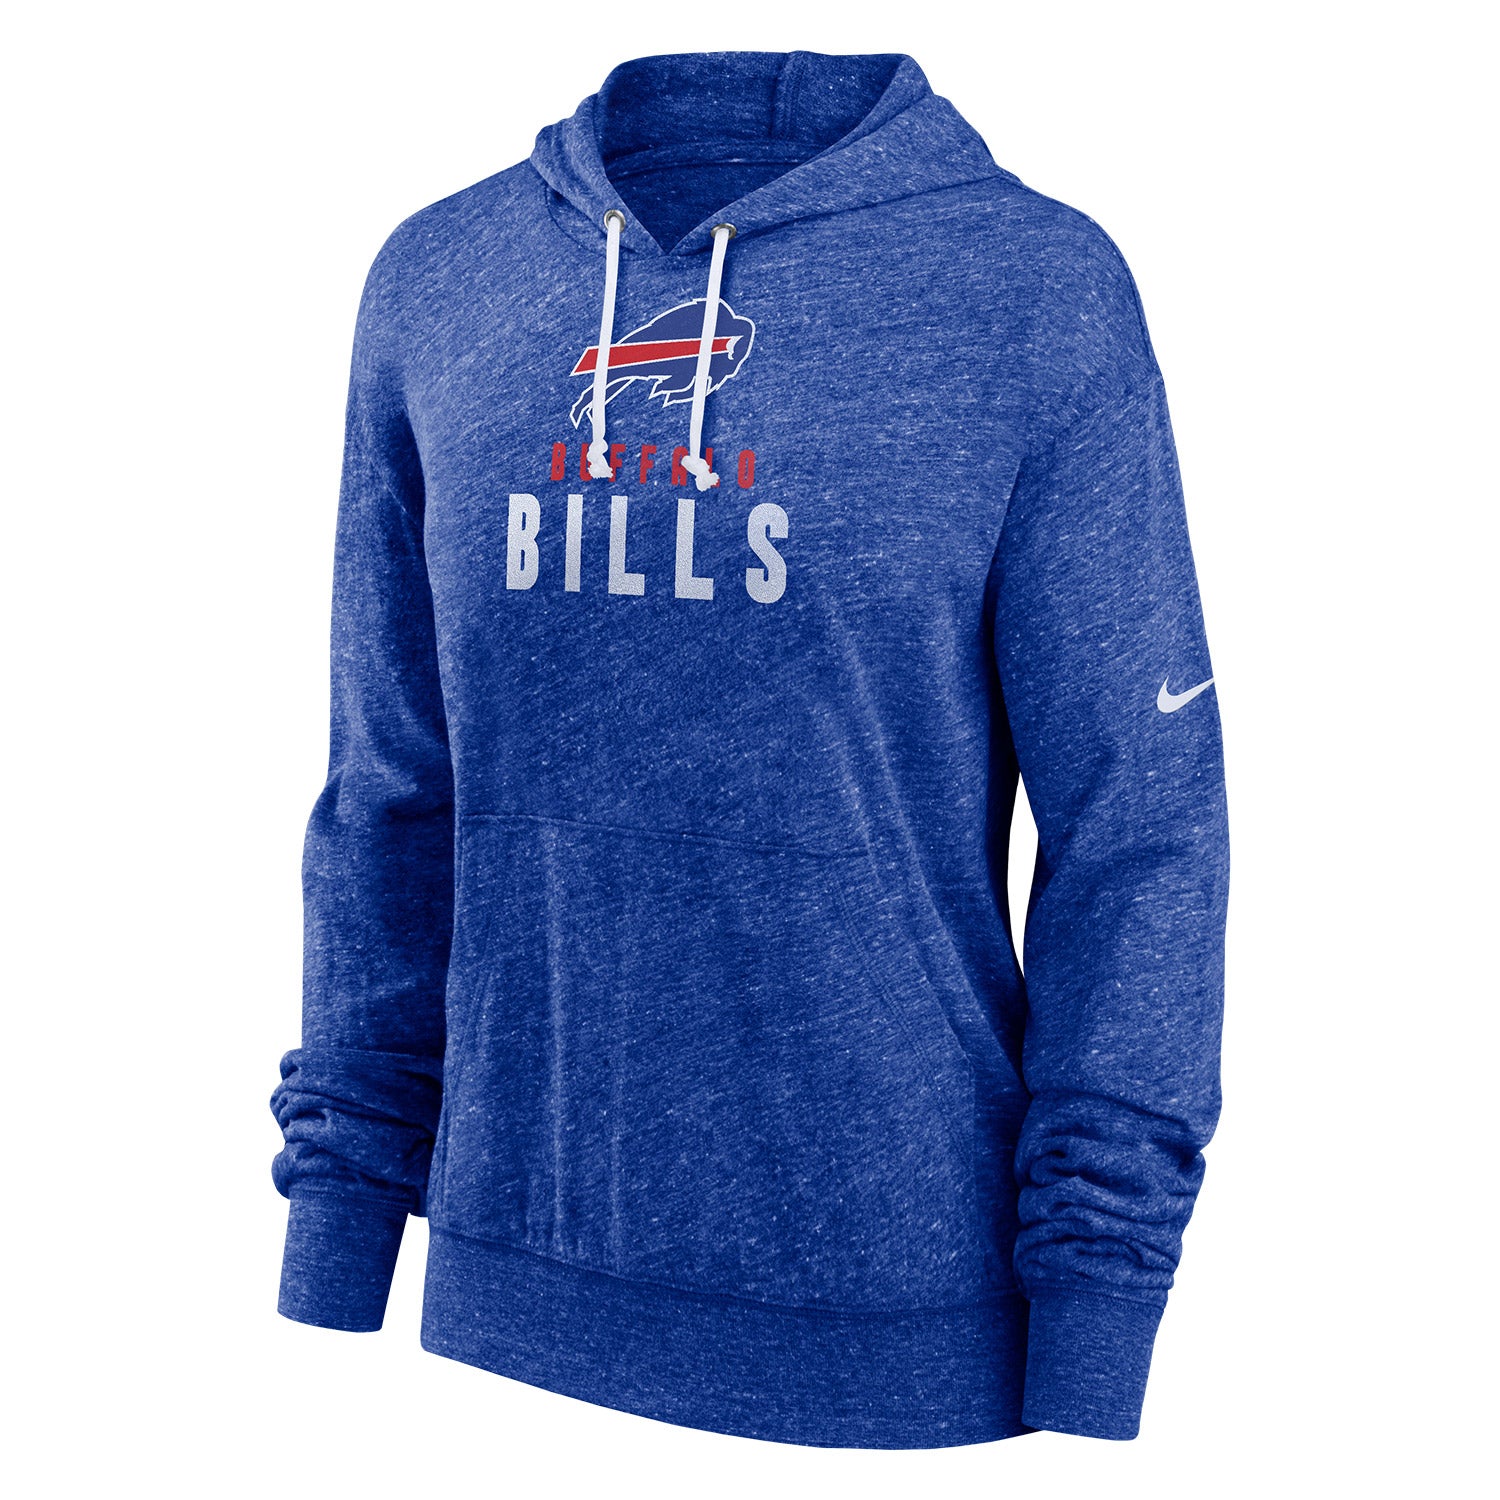 Nike Women's Gym Vintage (NFL Buffalo Bills) Pullover Hoodie in Blue, Size: Xs | NKZQ4DA81-06I